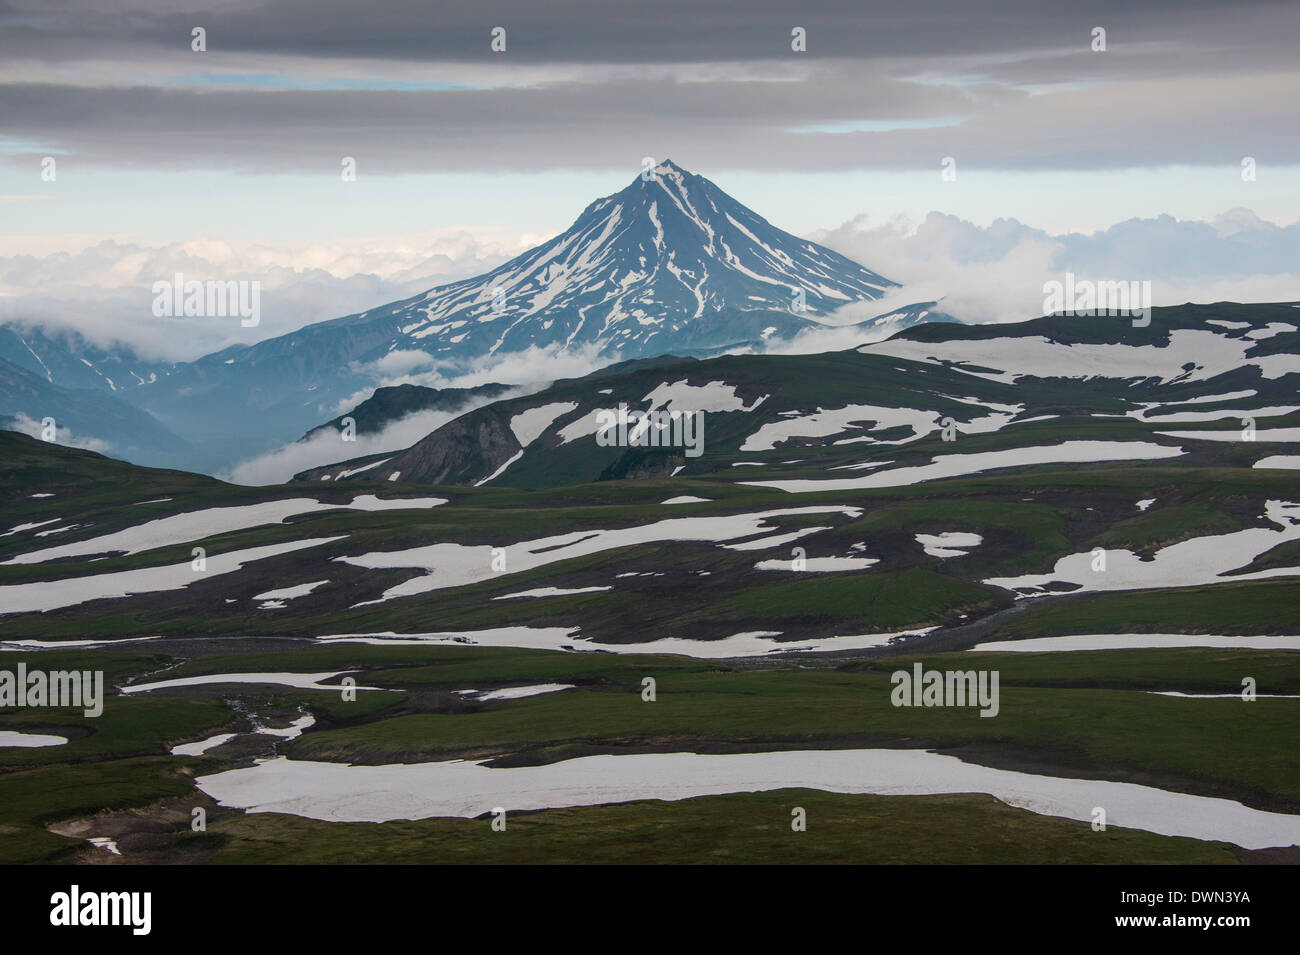 Luftaufnahmen von Wiljutschinsk Vulkan, Kamtschatka, Russland, Eurasien Stockfoto